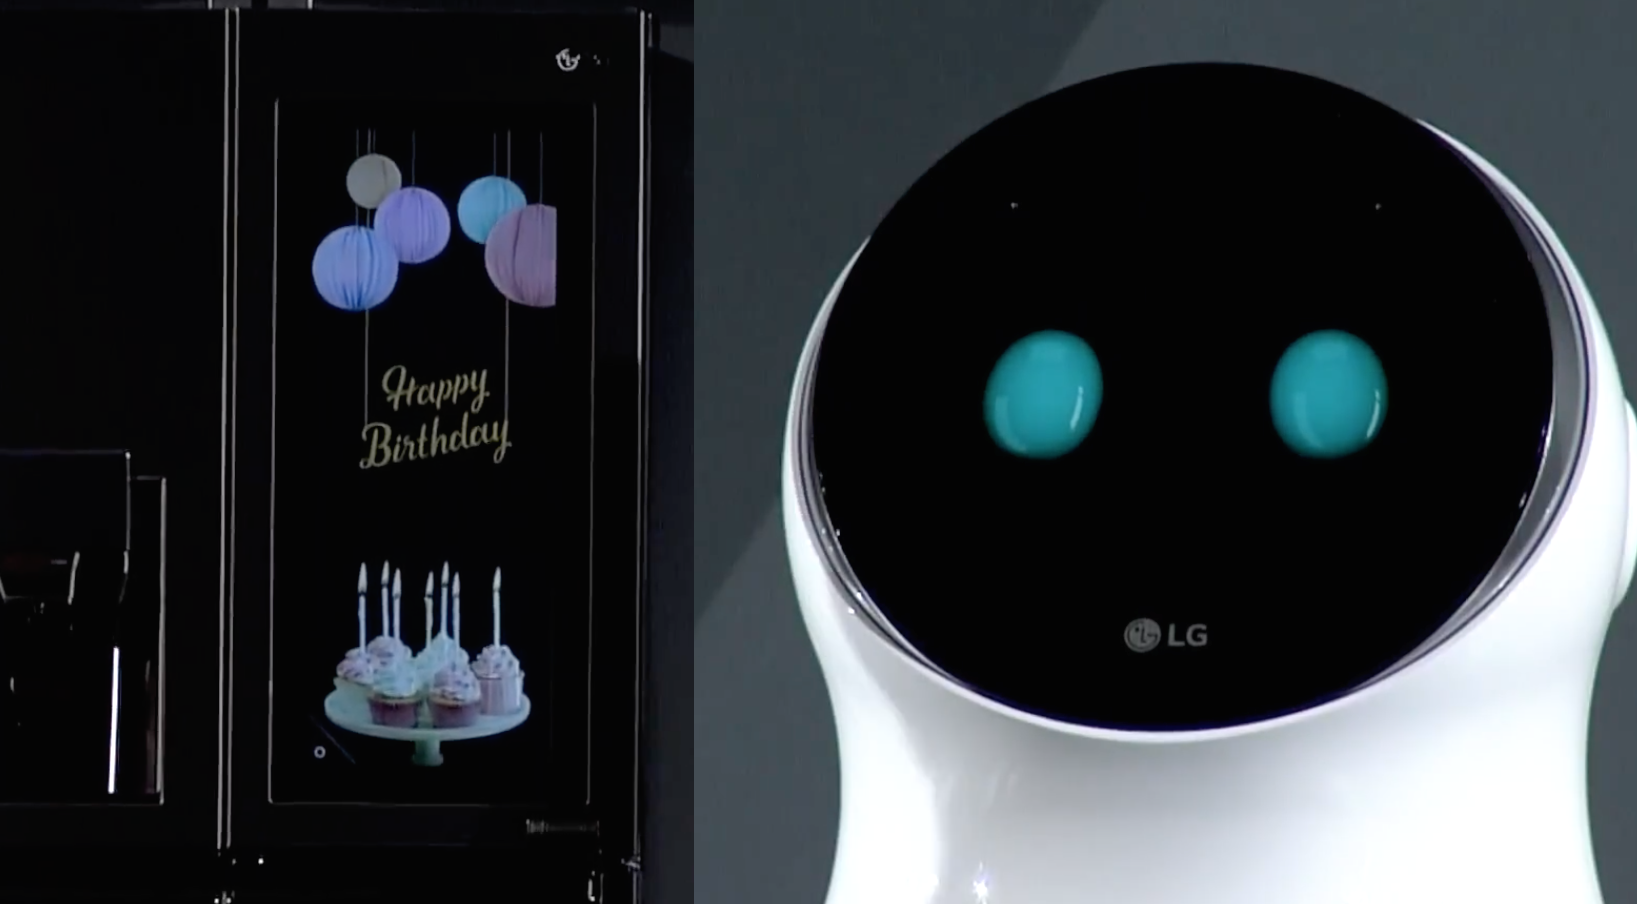 Amazon’s Alexa Integrated Into LG Refrigerator & Creepy, Blinking “Hub Robot”